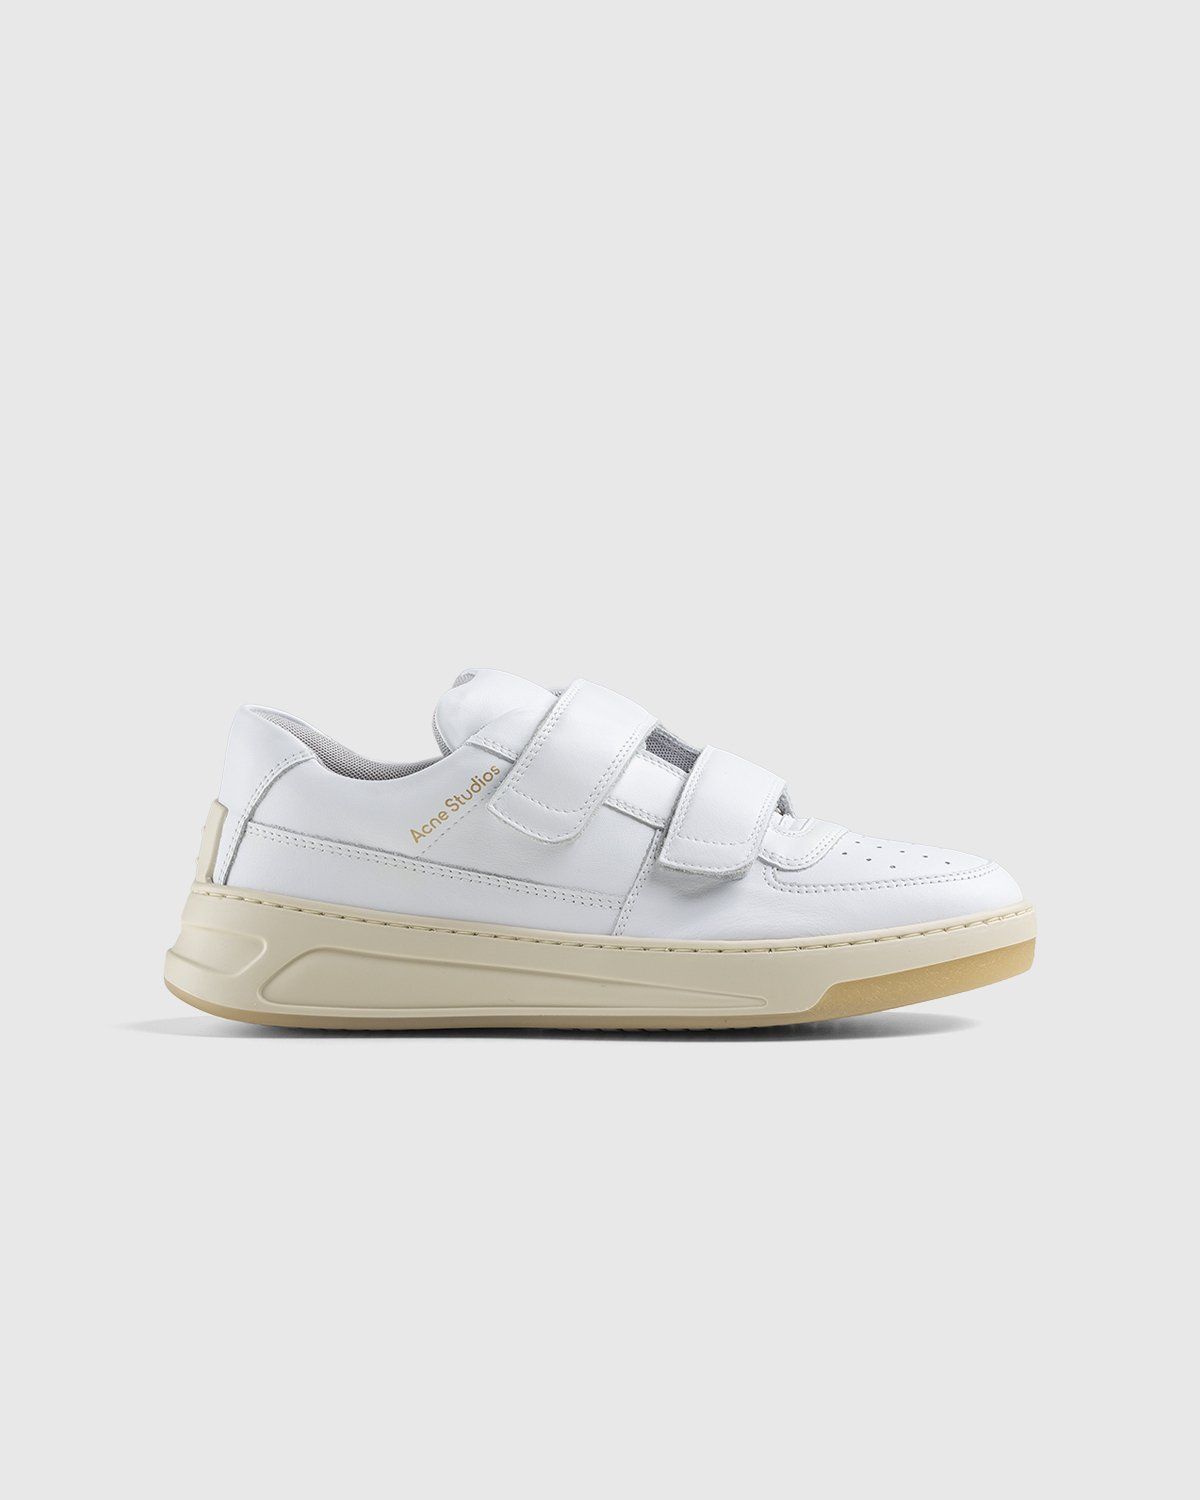 Acne Studios – Perey Velcro Strap Sneakers White - Sneakers - White - Image 1